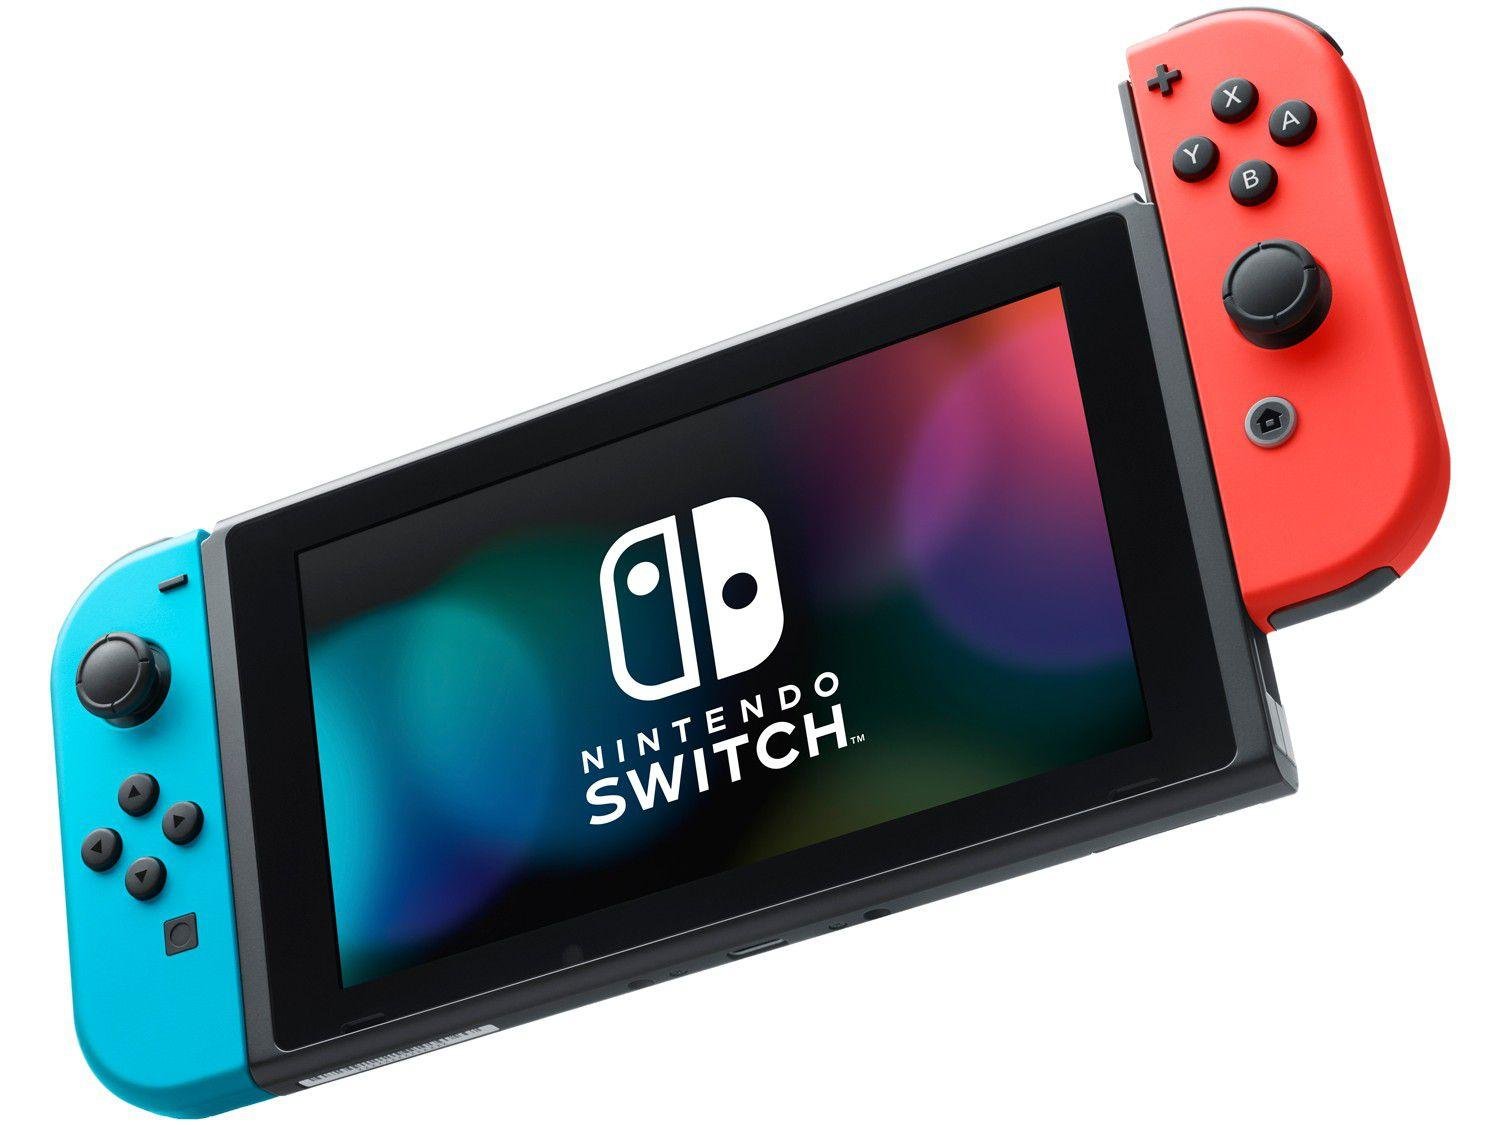 Nuuvem vende jogos do Nintendo Switch no Brasil - Olhar Digital